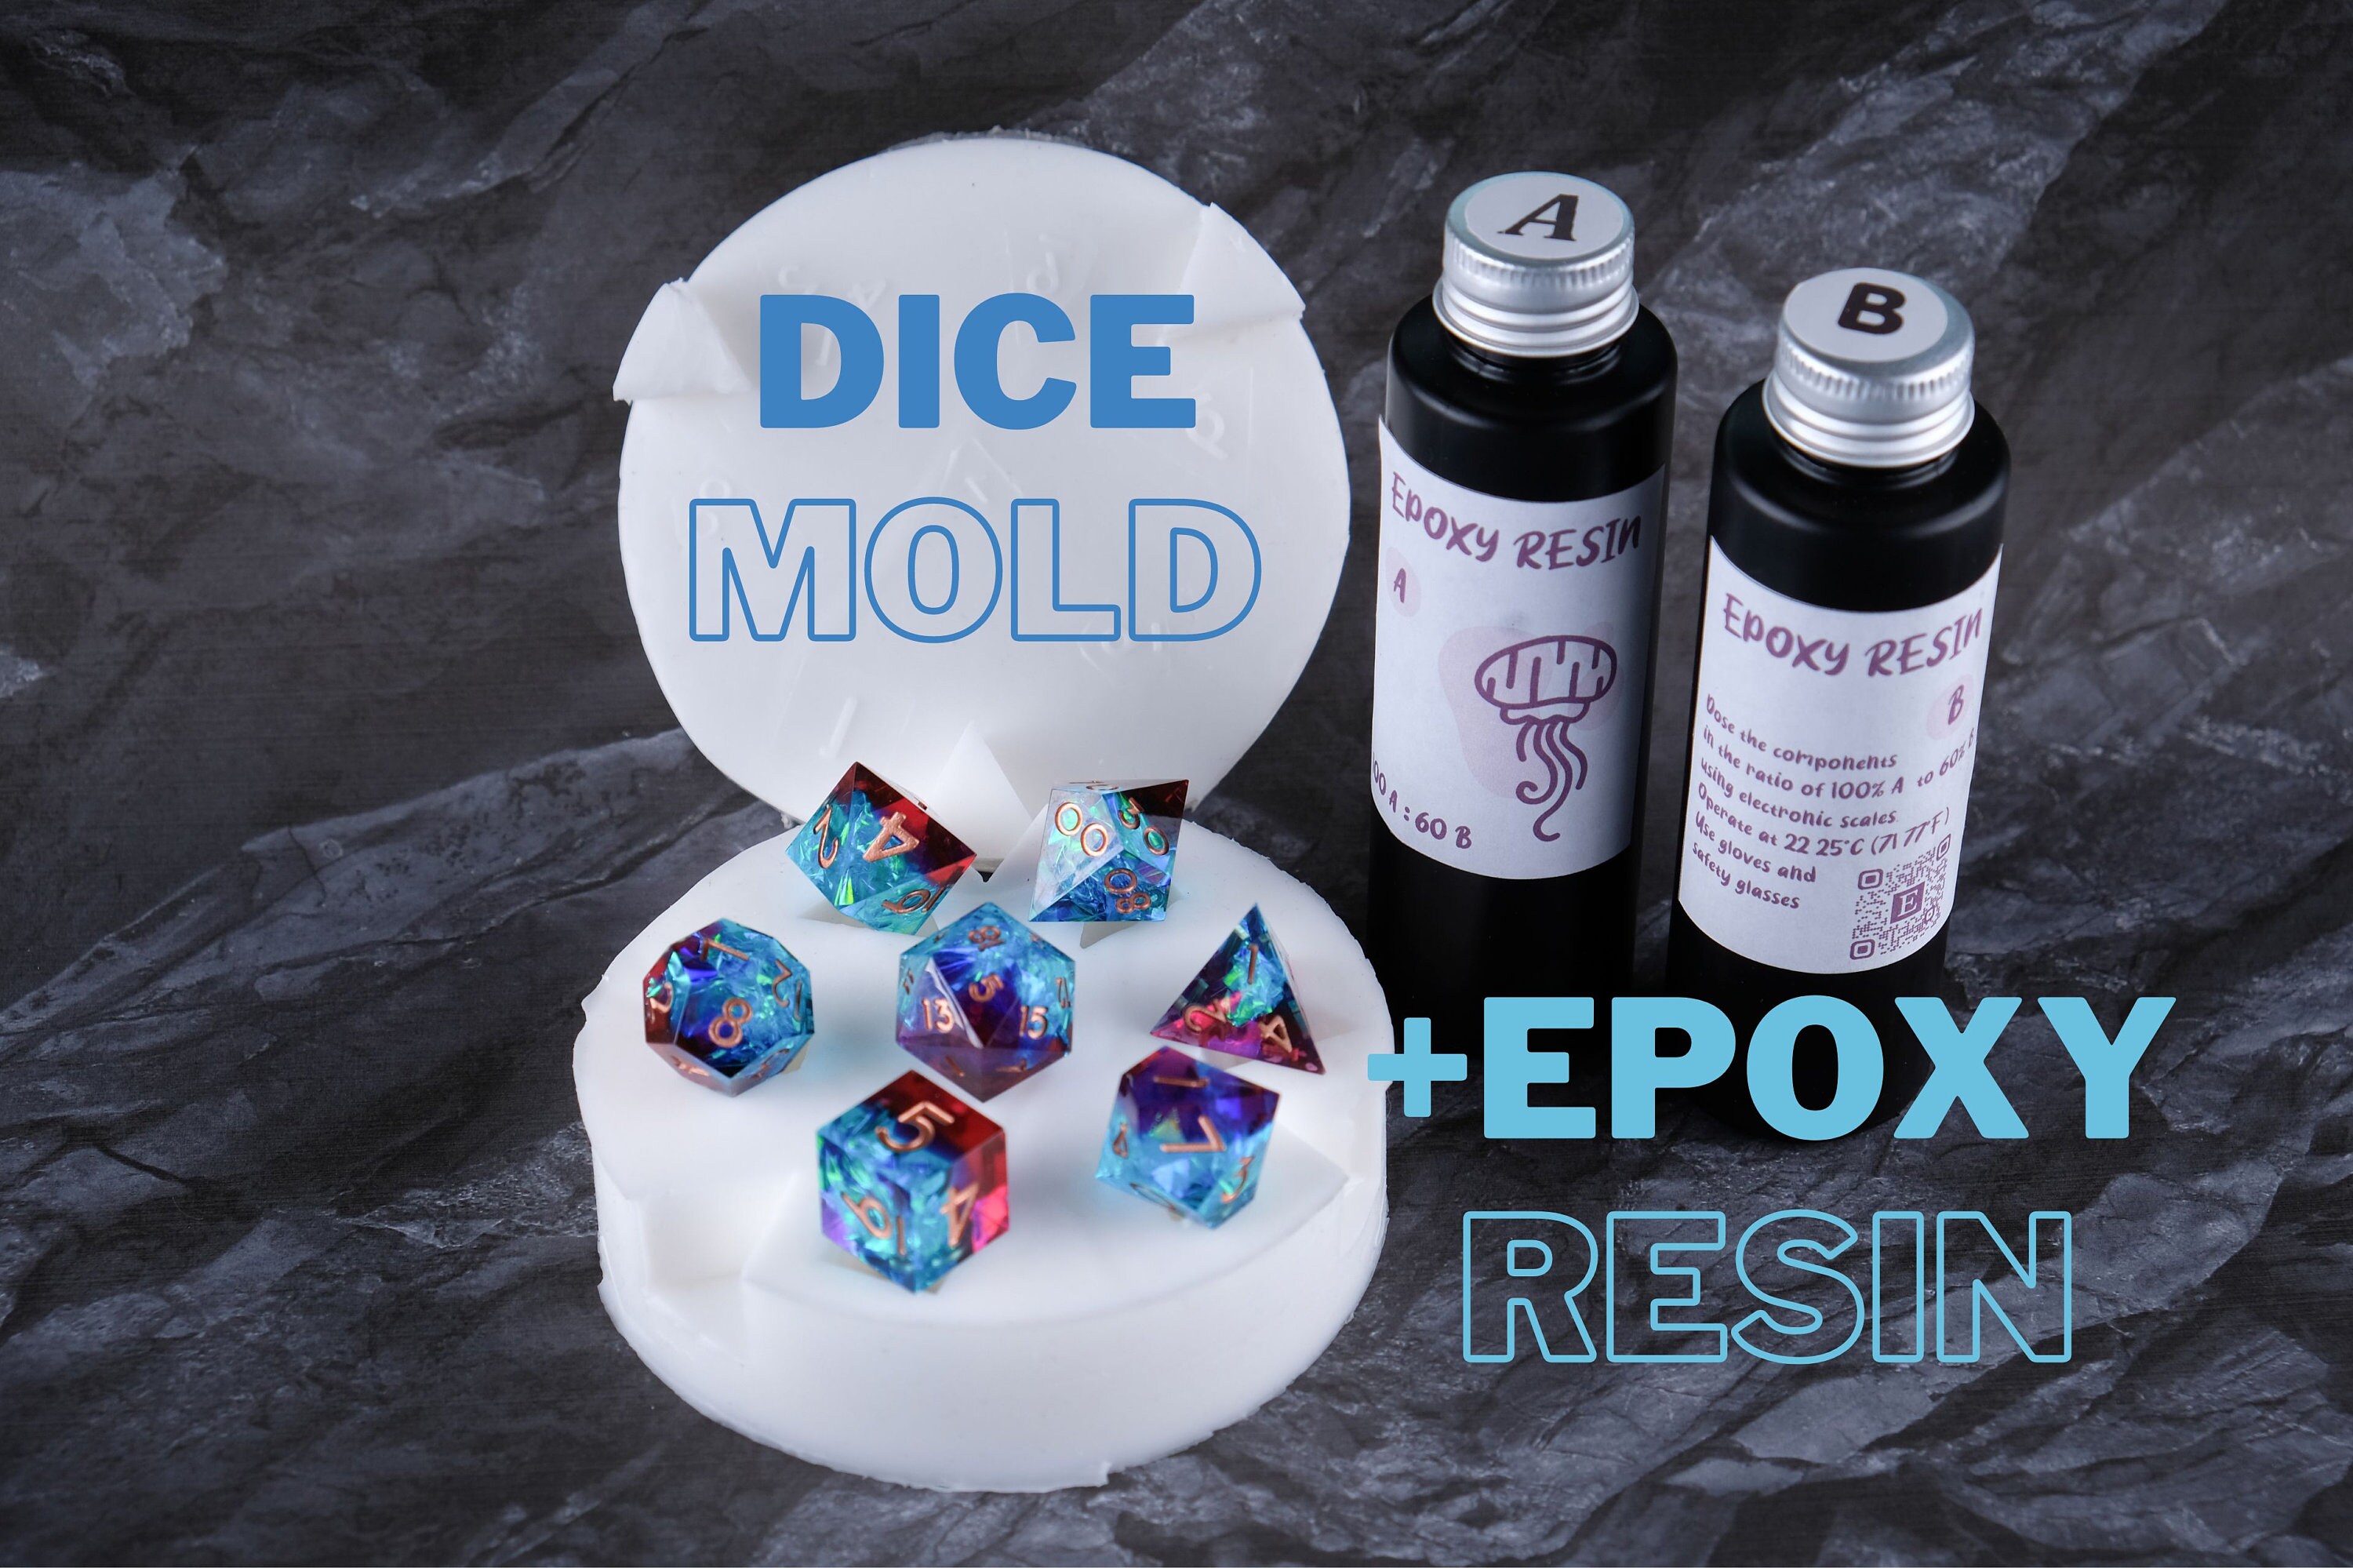 Dice mold maker : r/resinprinting